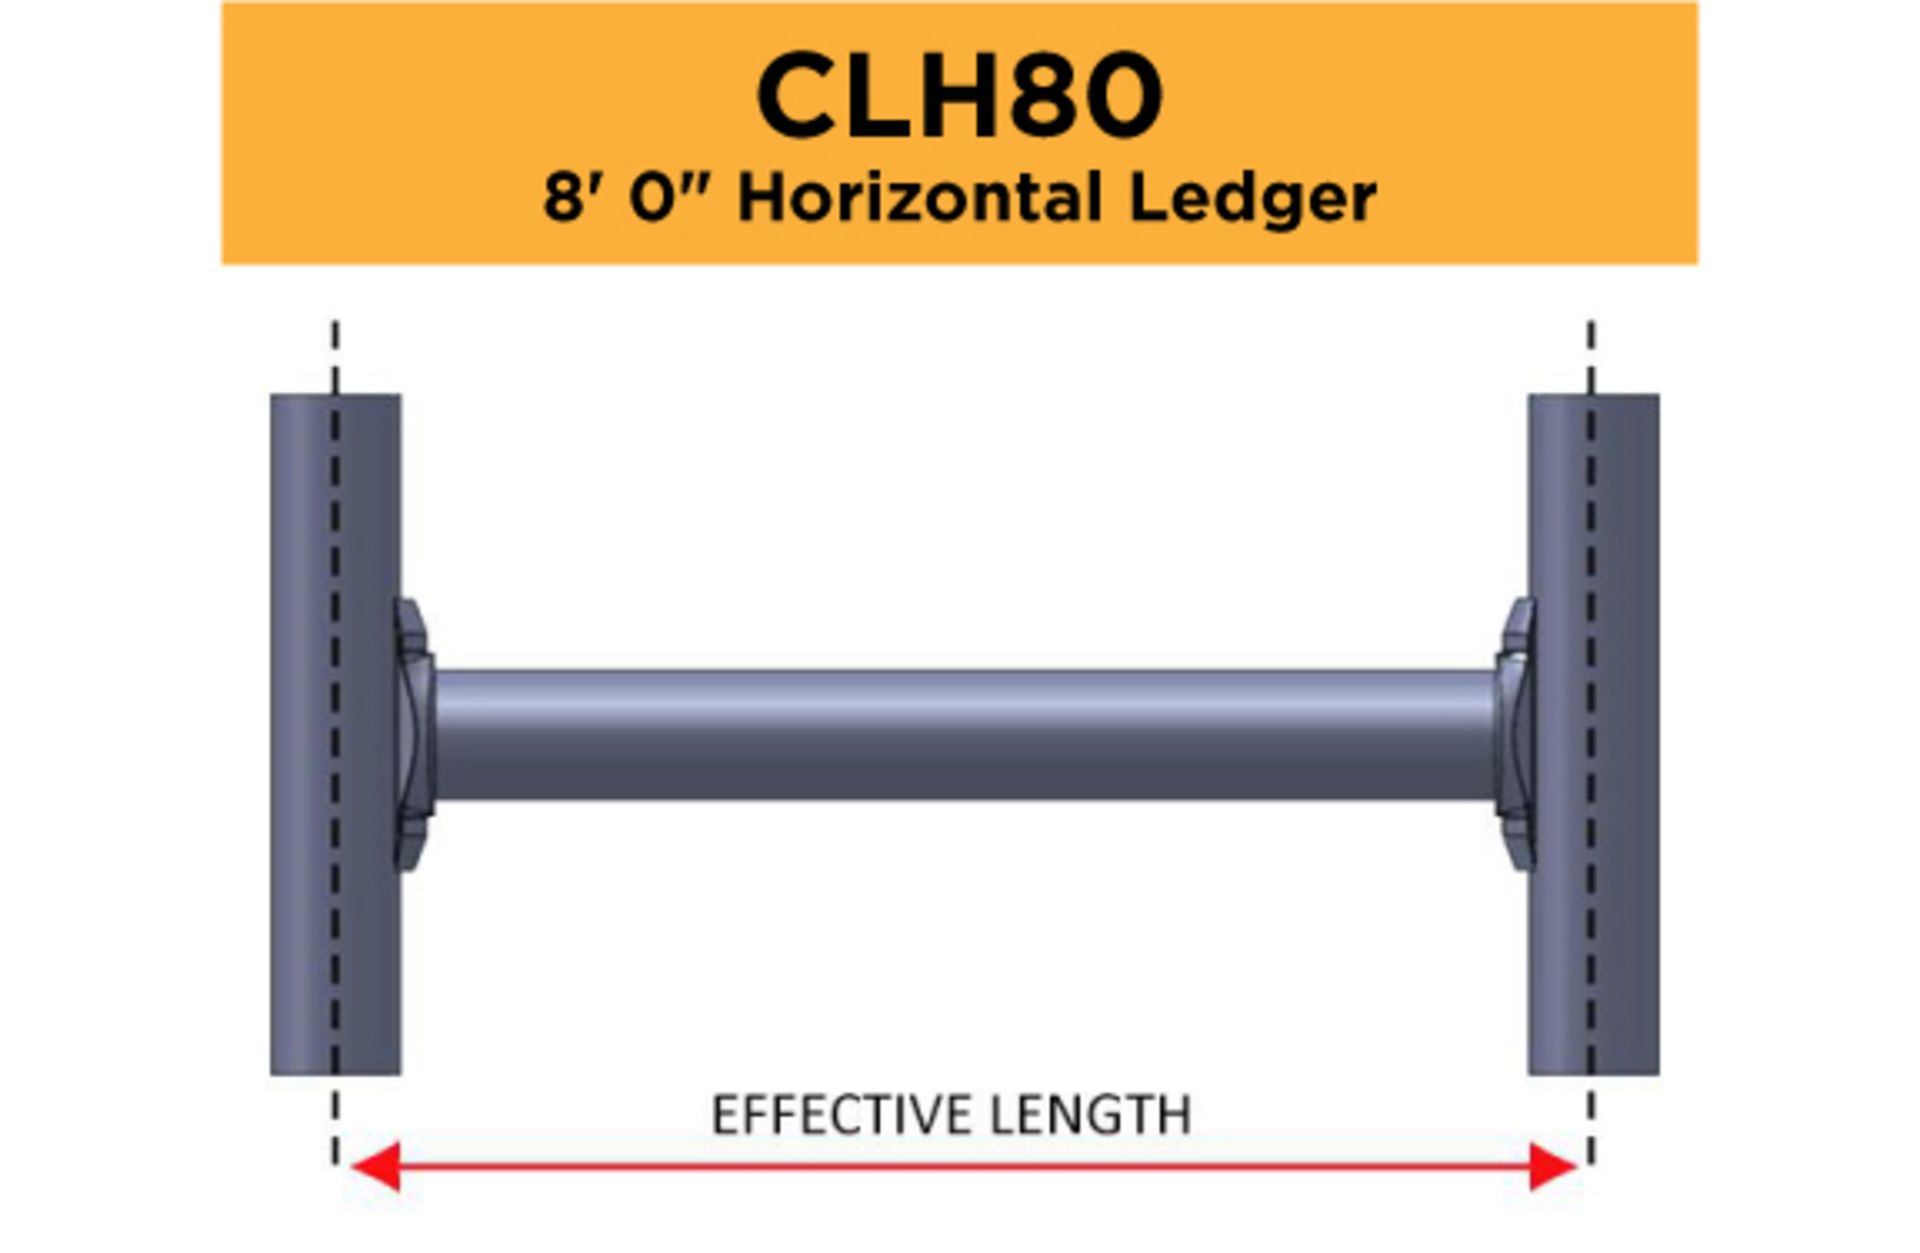 Lot of (450) 8' 0" Horizontal Ledger - Bay Length 96" (2.44M); Type: CLH80 - (3) Racks Per Lot -